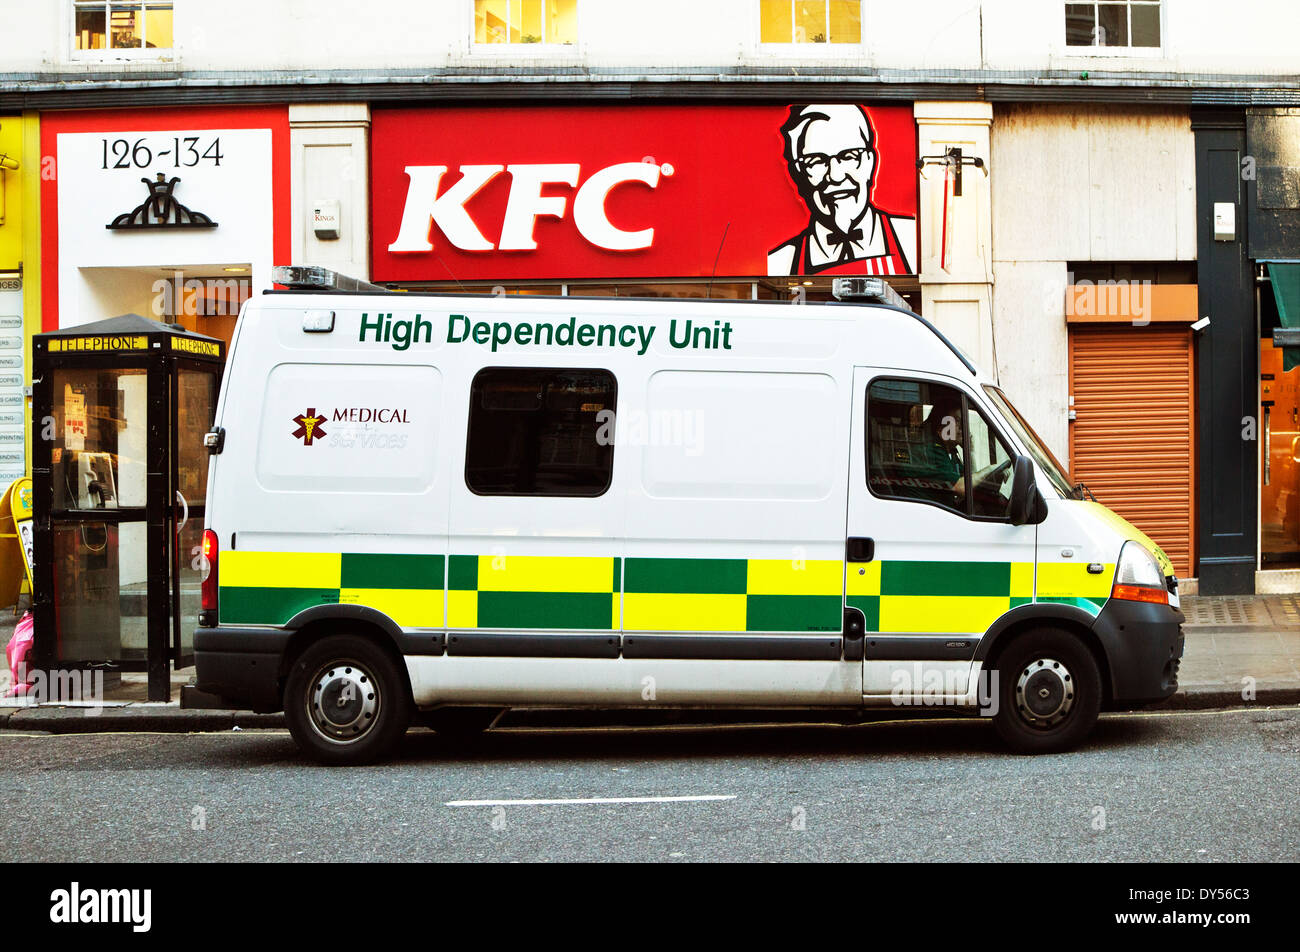 Grande dépendance ambulance, Baker Street, London, England, UK Banque D'Images